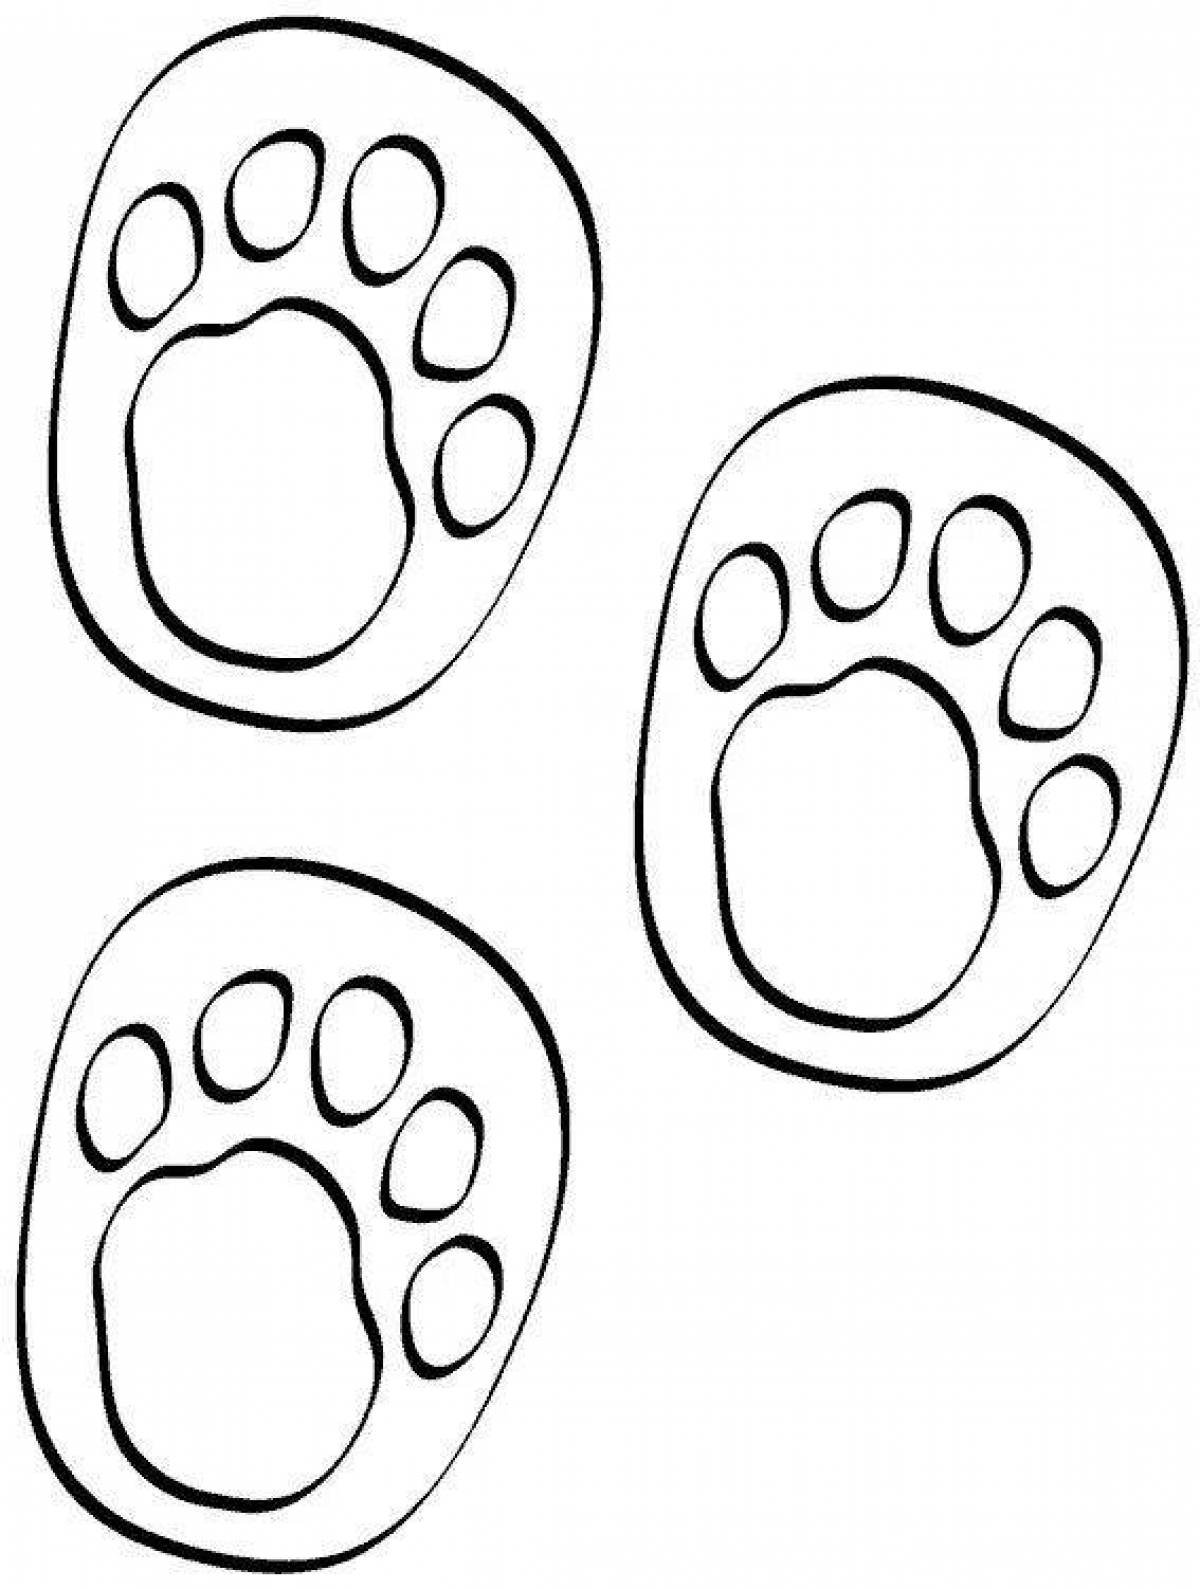 Colored animal footprints